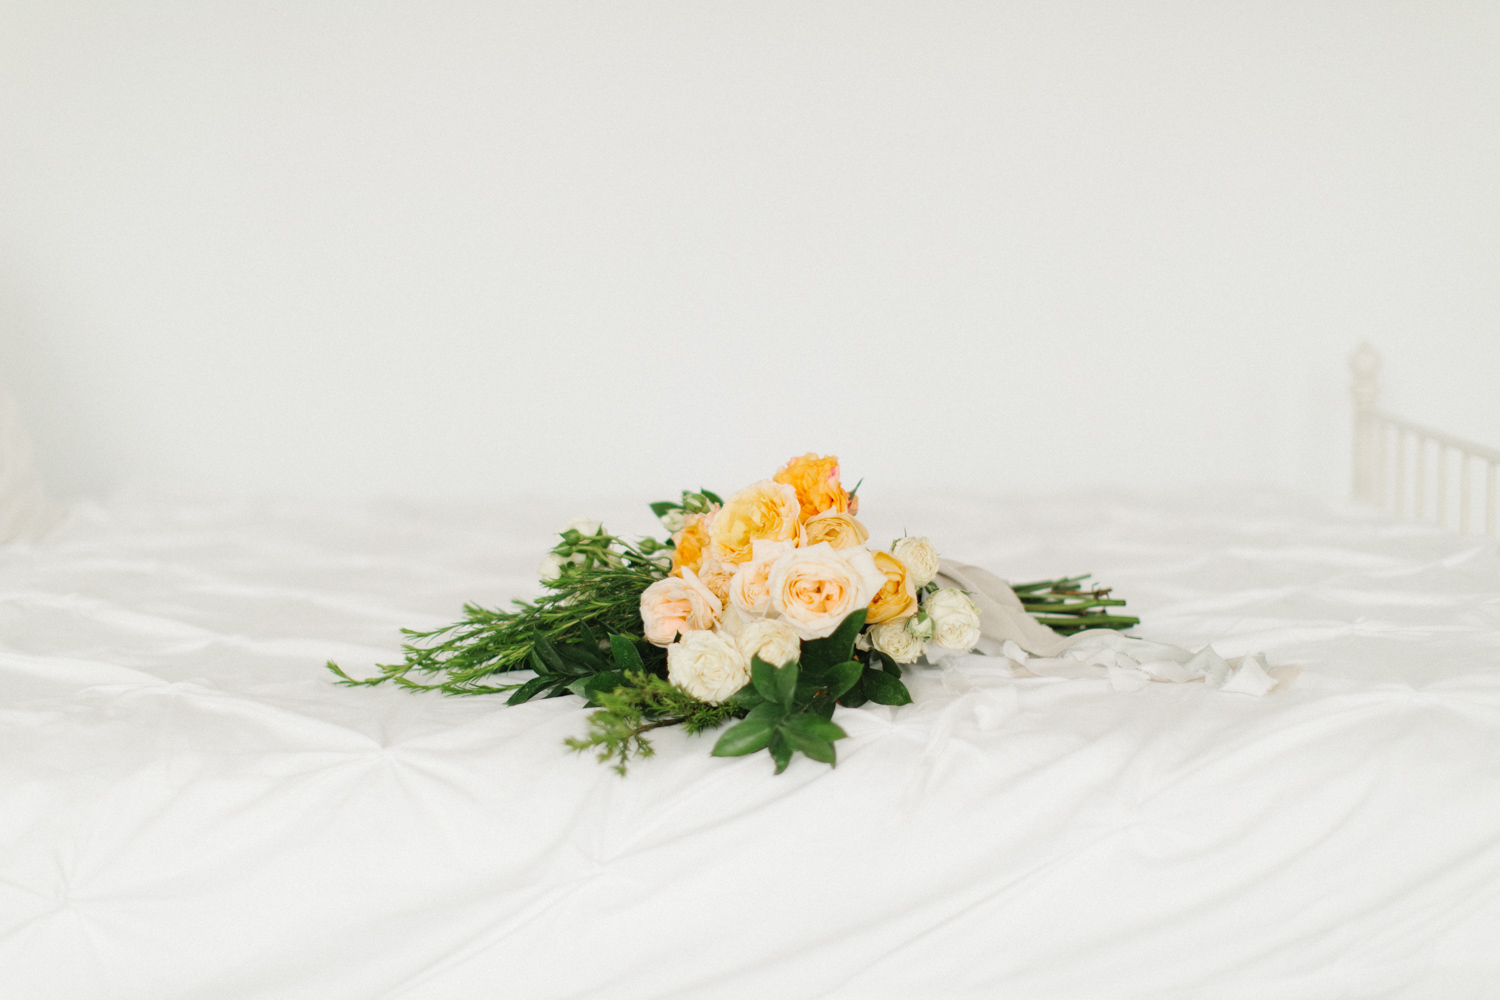 Seattle Fine Art Wedding Photographer | Seattle Downtown White Studio Bridal Session | Stunning Wedding Bouquet | Seattle Bride | Seattle Wedding | Photography Studio Space | Emma Rose Company Wedding Photography-11.jpg